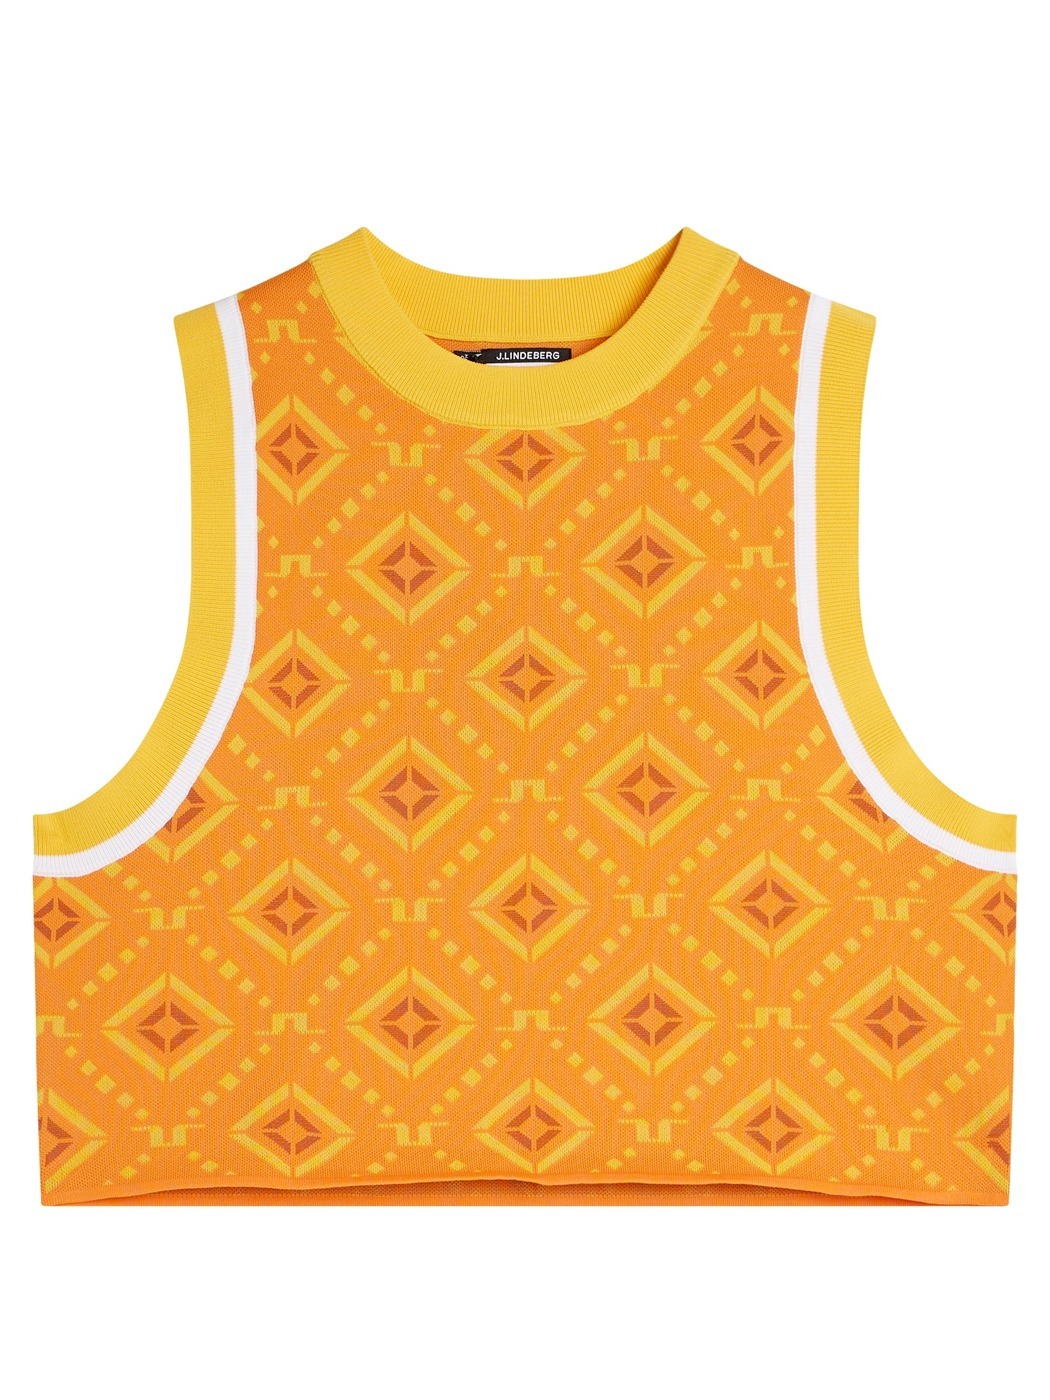 Jaylindberg Women&#039;s Golf Preza Knit Vest (Orange Diamond Logo)